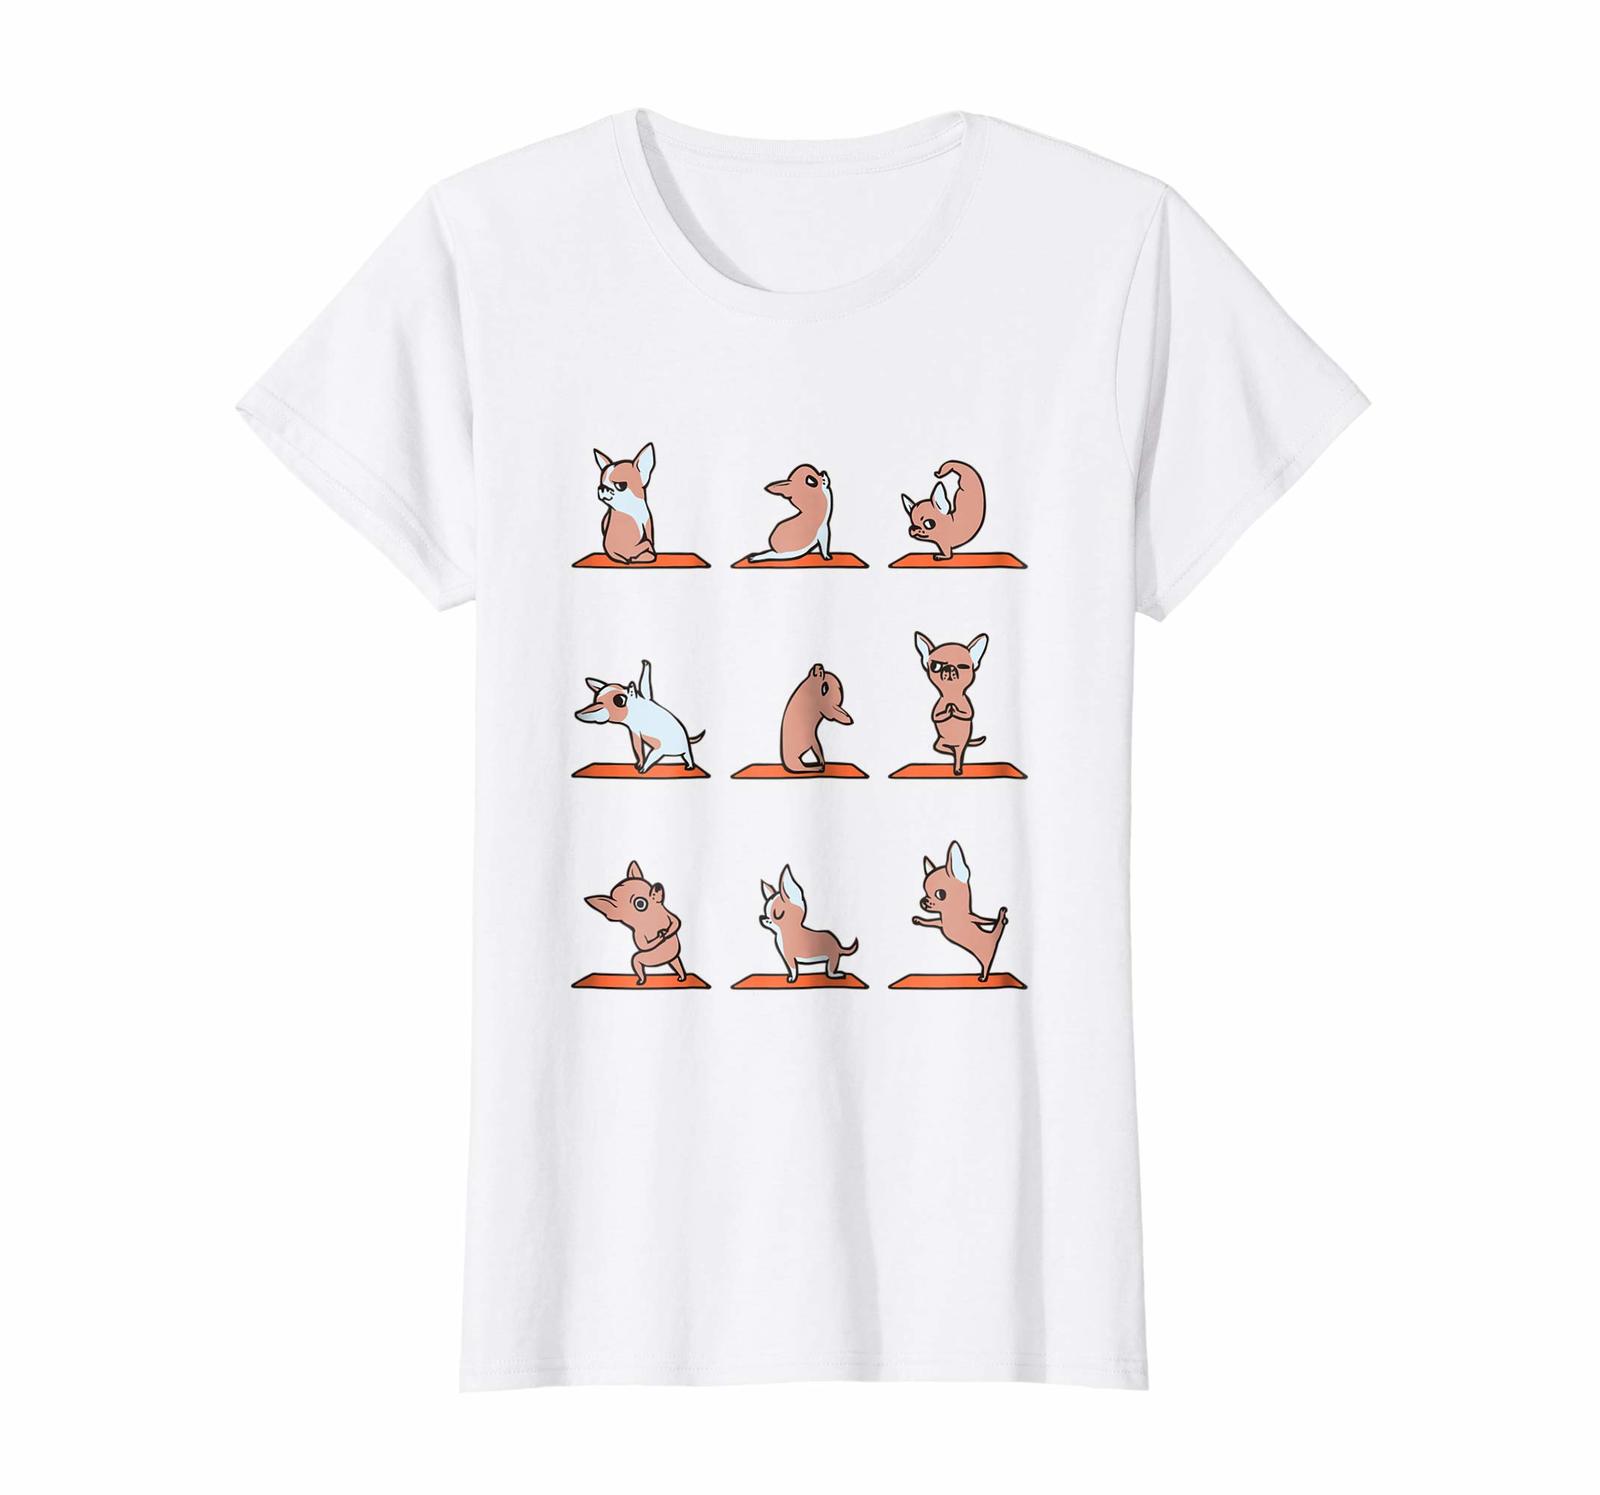 Dog Fashion - Chihuahua Yoga Funny Shirt Wowen